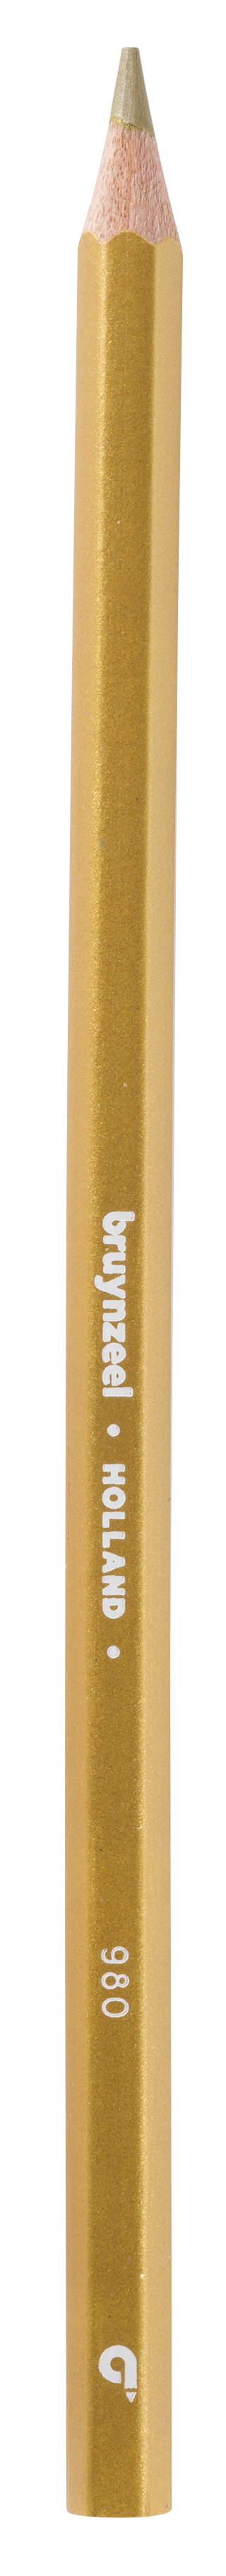 BRUYNZEEL Crayon de couleur Super 3.3mm 60516980 gold